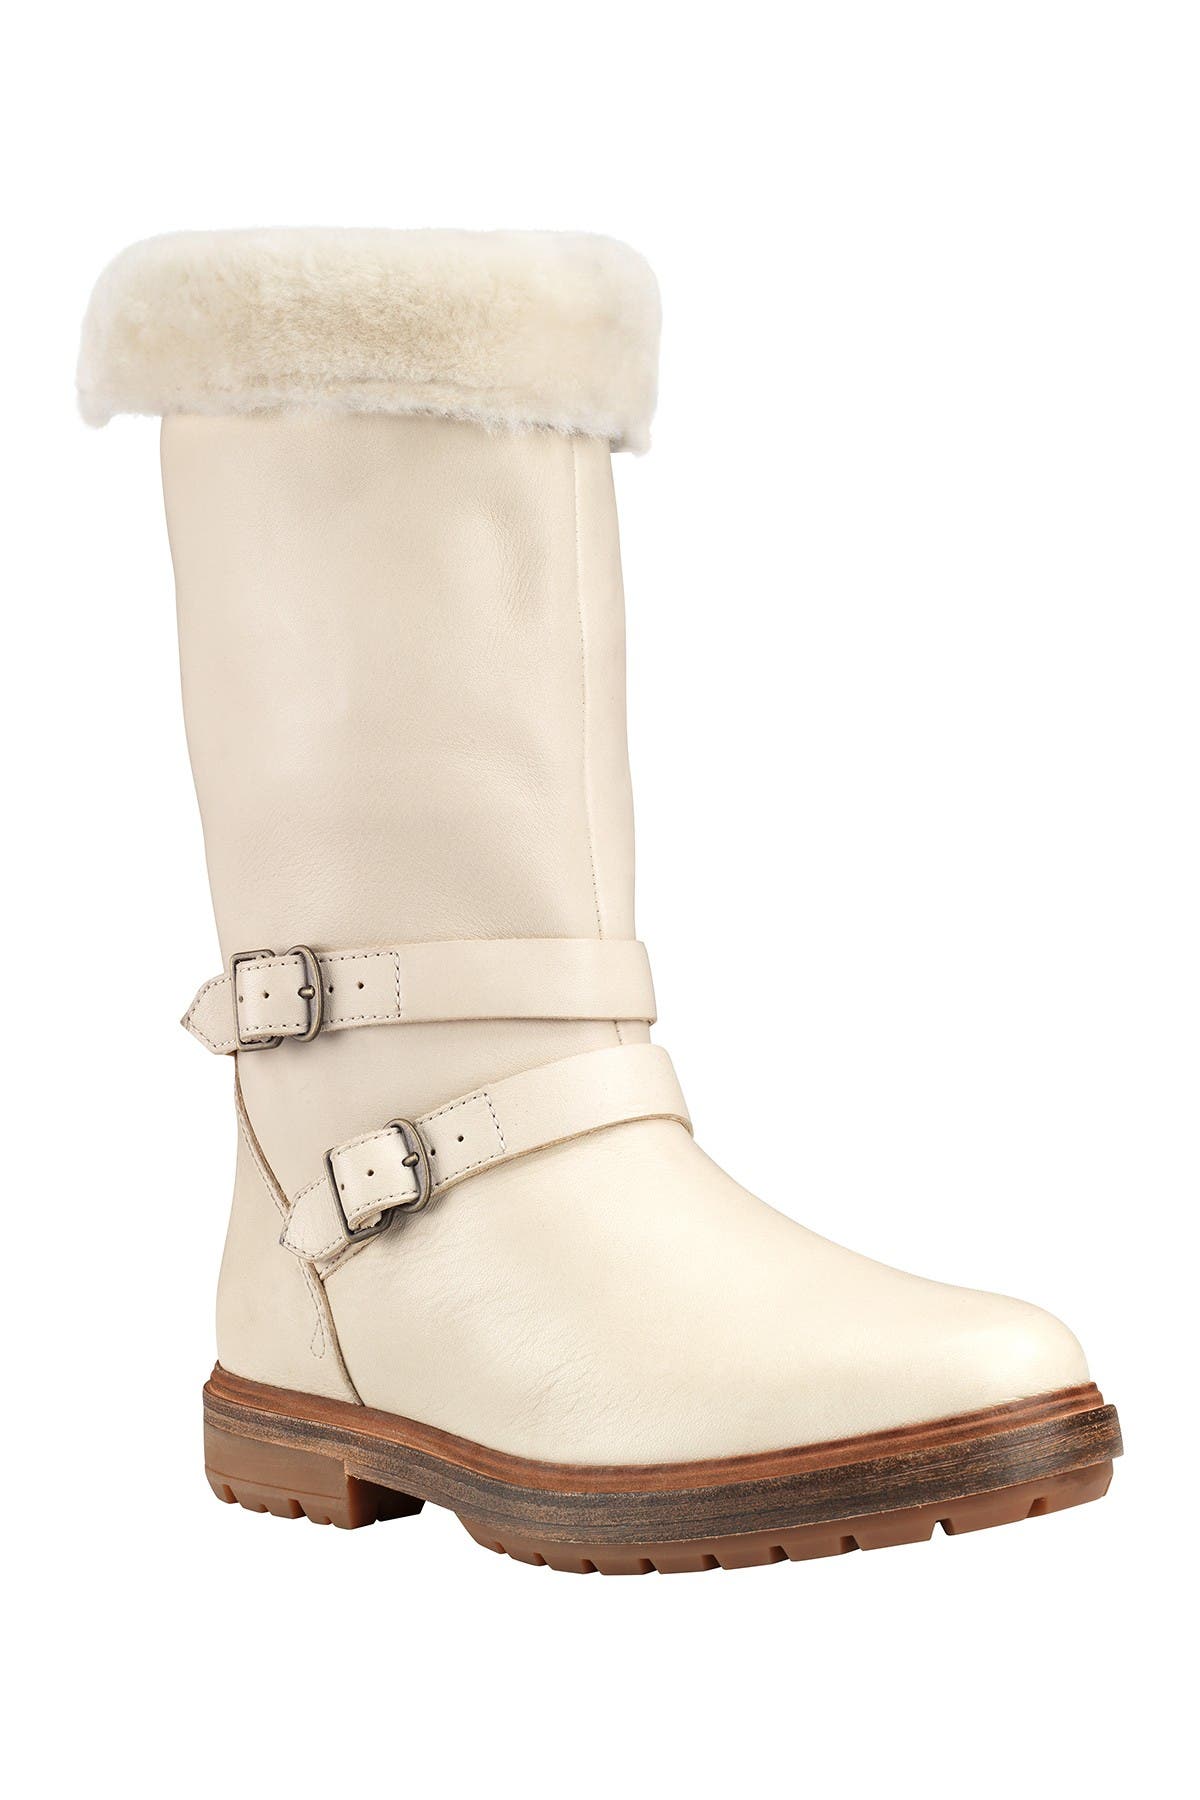 timberland womens winter boots